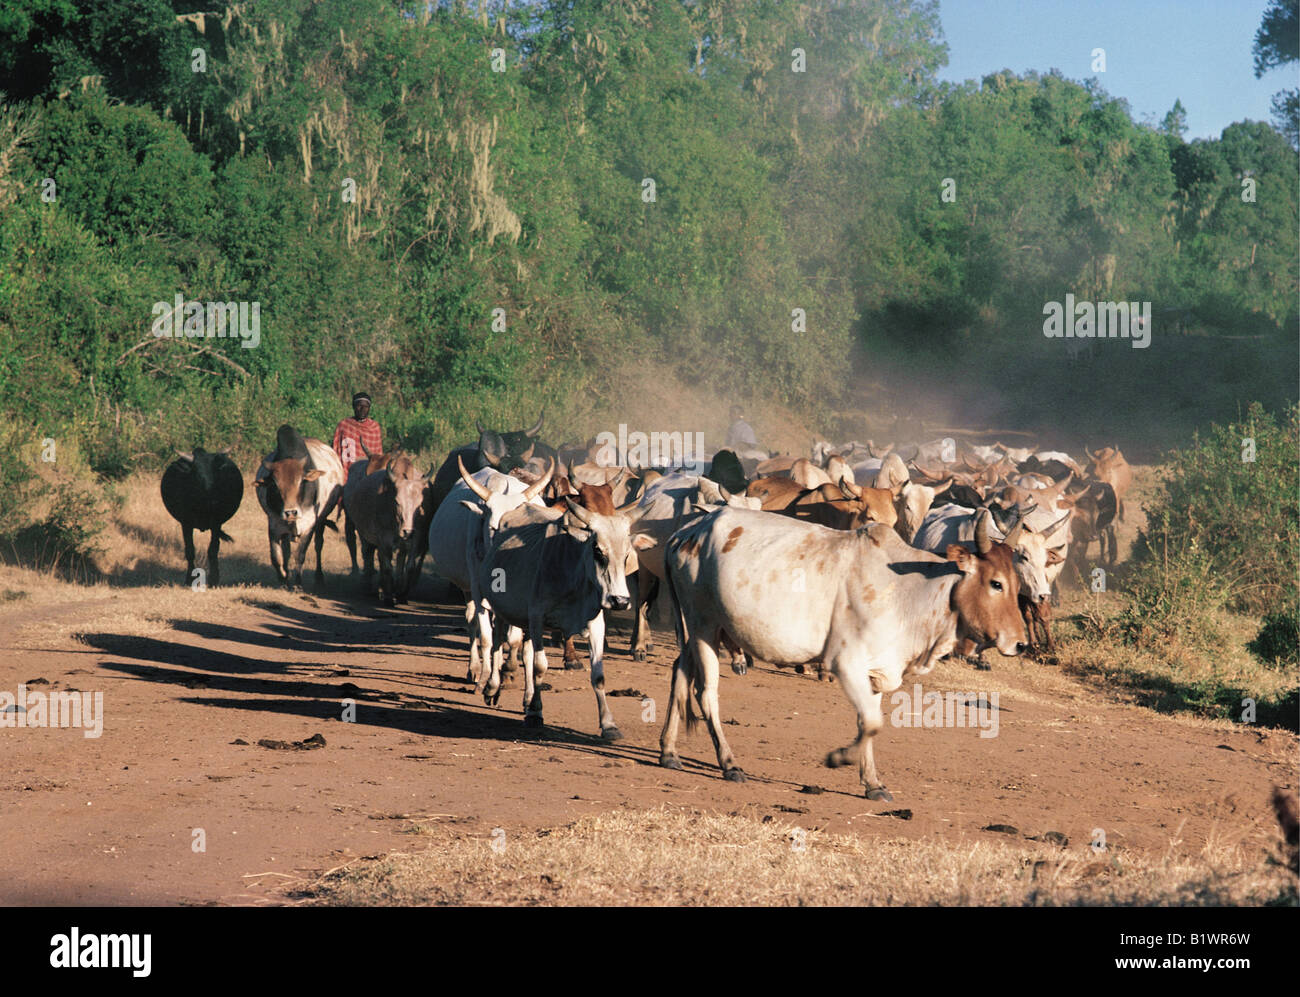 Samburu warriors moran escorting a herd of cattle down a dirt road The cattle raise dust in evening light Maralal mountain Kenya Stock Photo